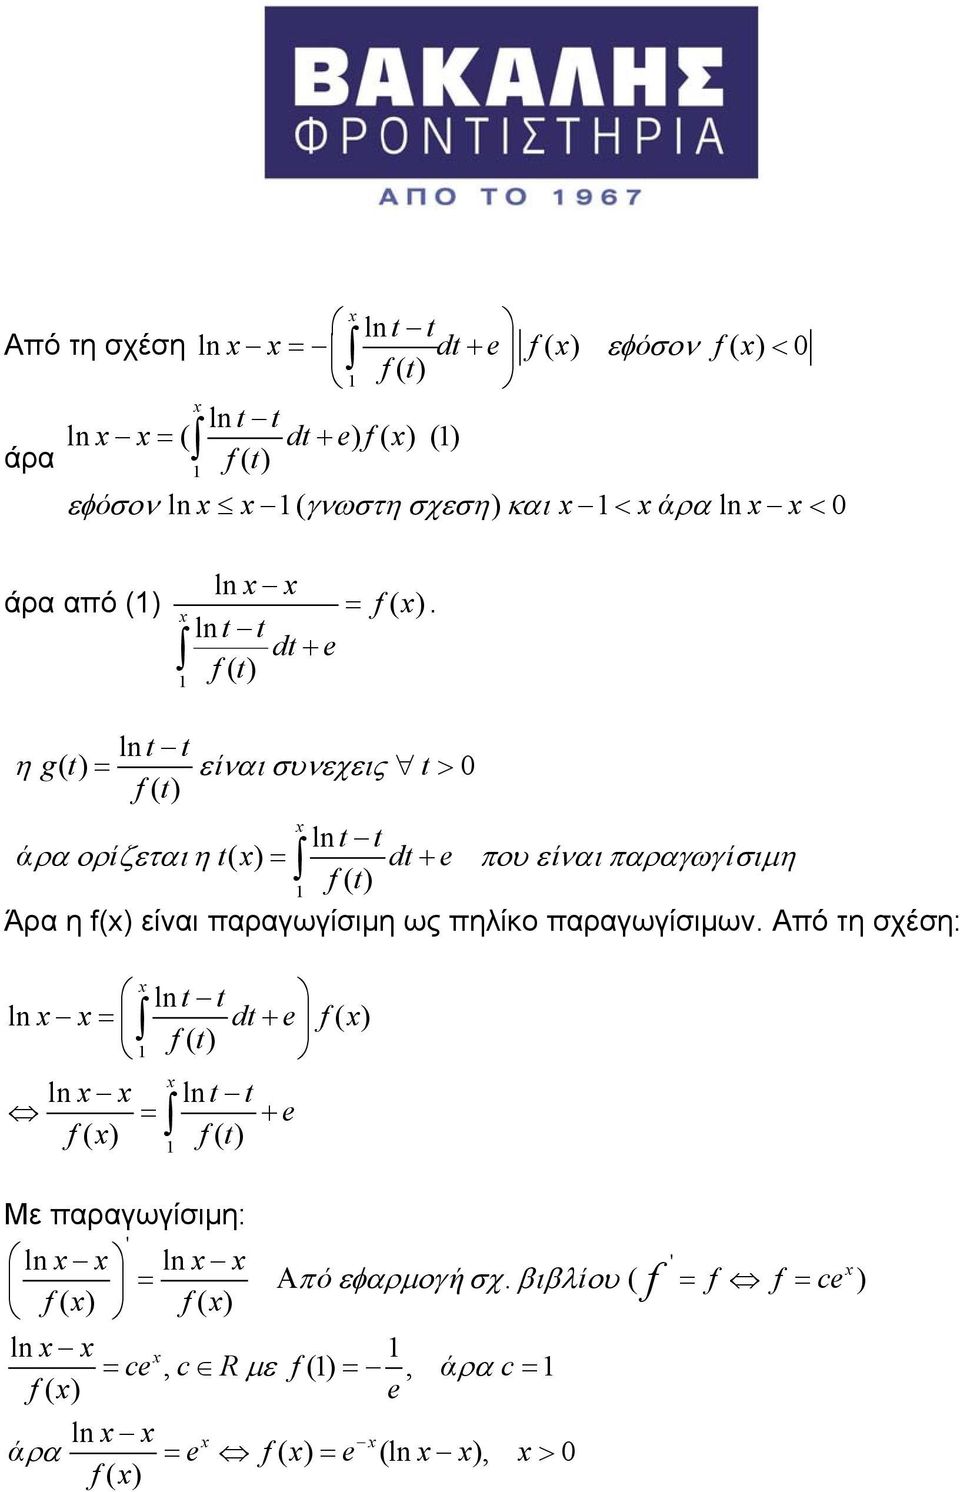 ln η g () = είναι συνεχεις > 0 f() ln άρα ορίζεται η ( ) = d+ που είναι παραγωγ ίσιμη f() Άρα η f() είναι παραγωγίσιμη ως